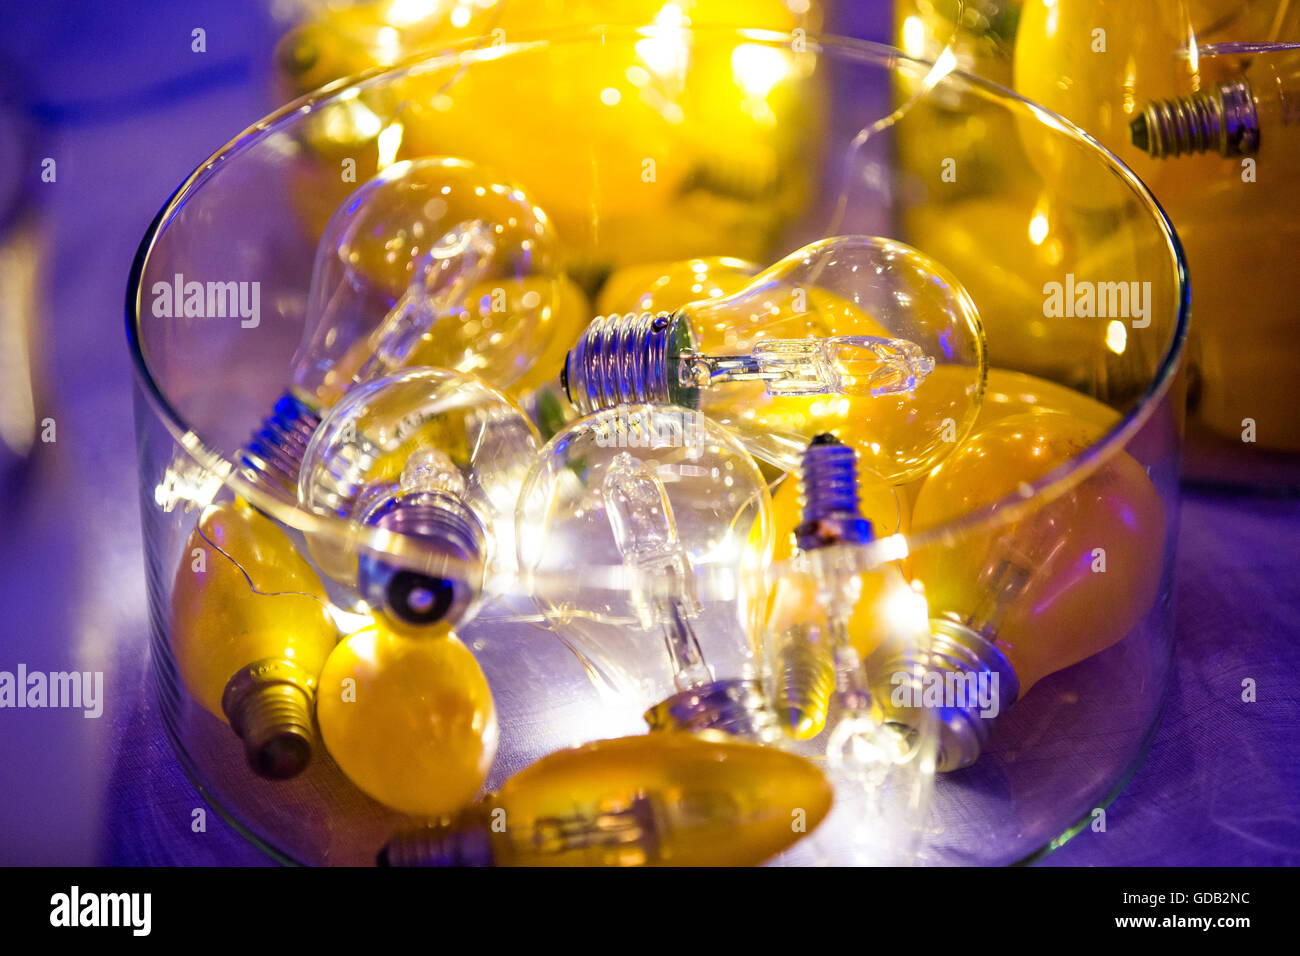 Decorative lightbulbs in a vase Stock Photo